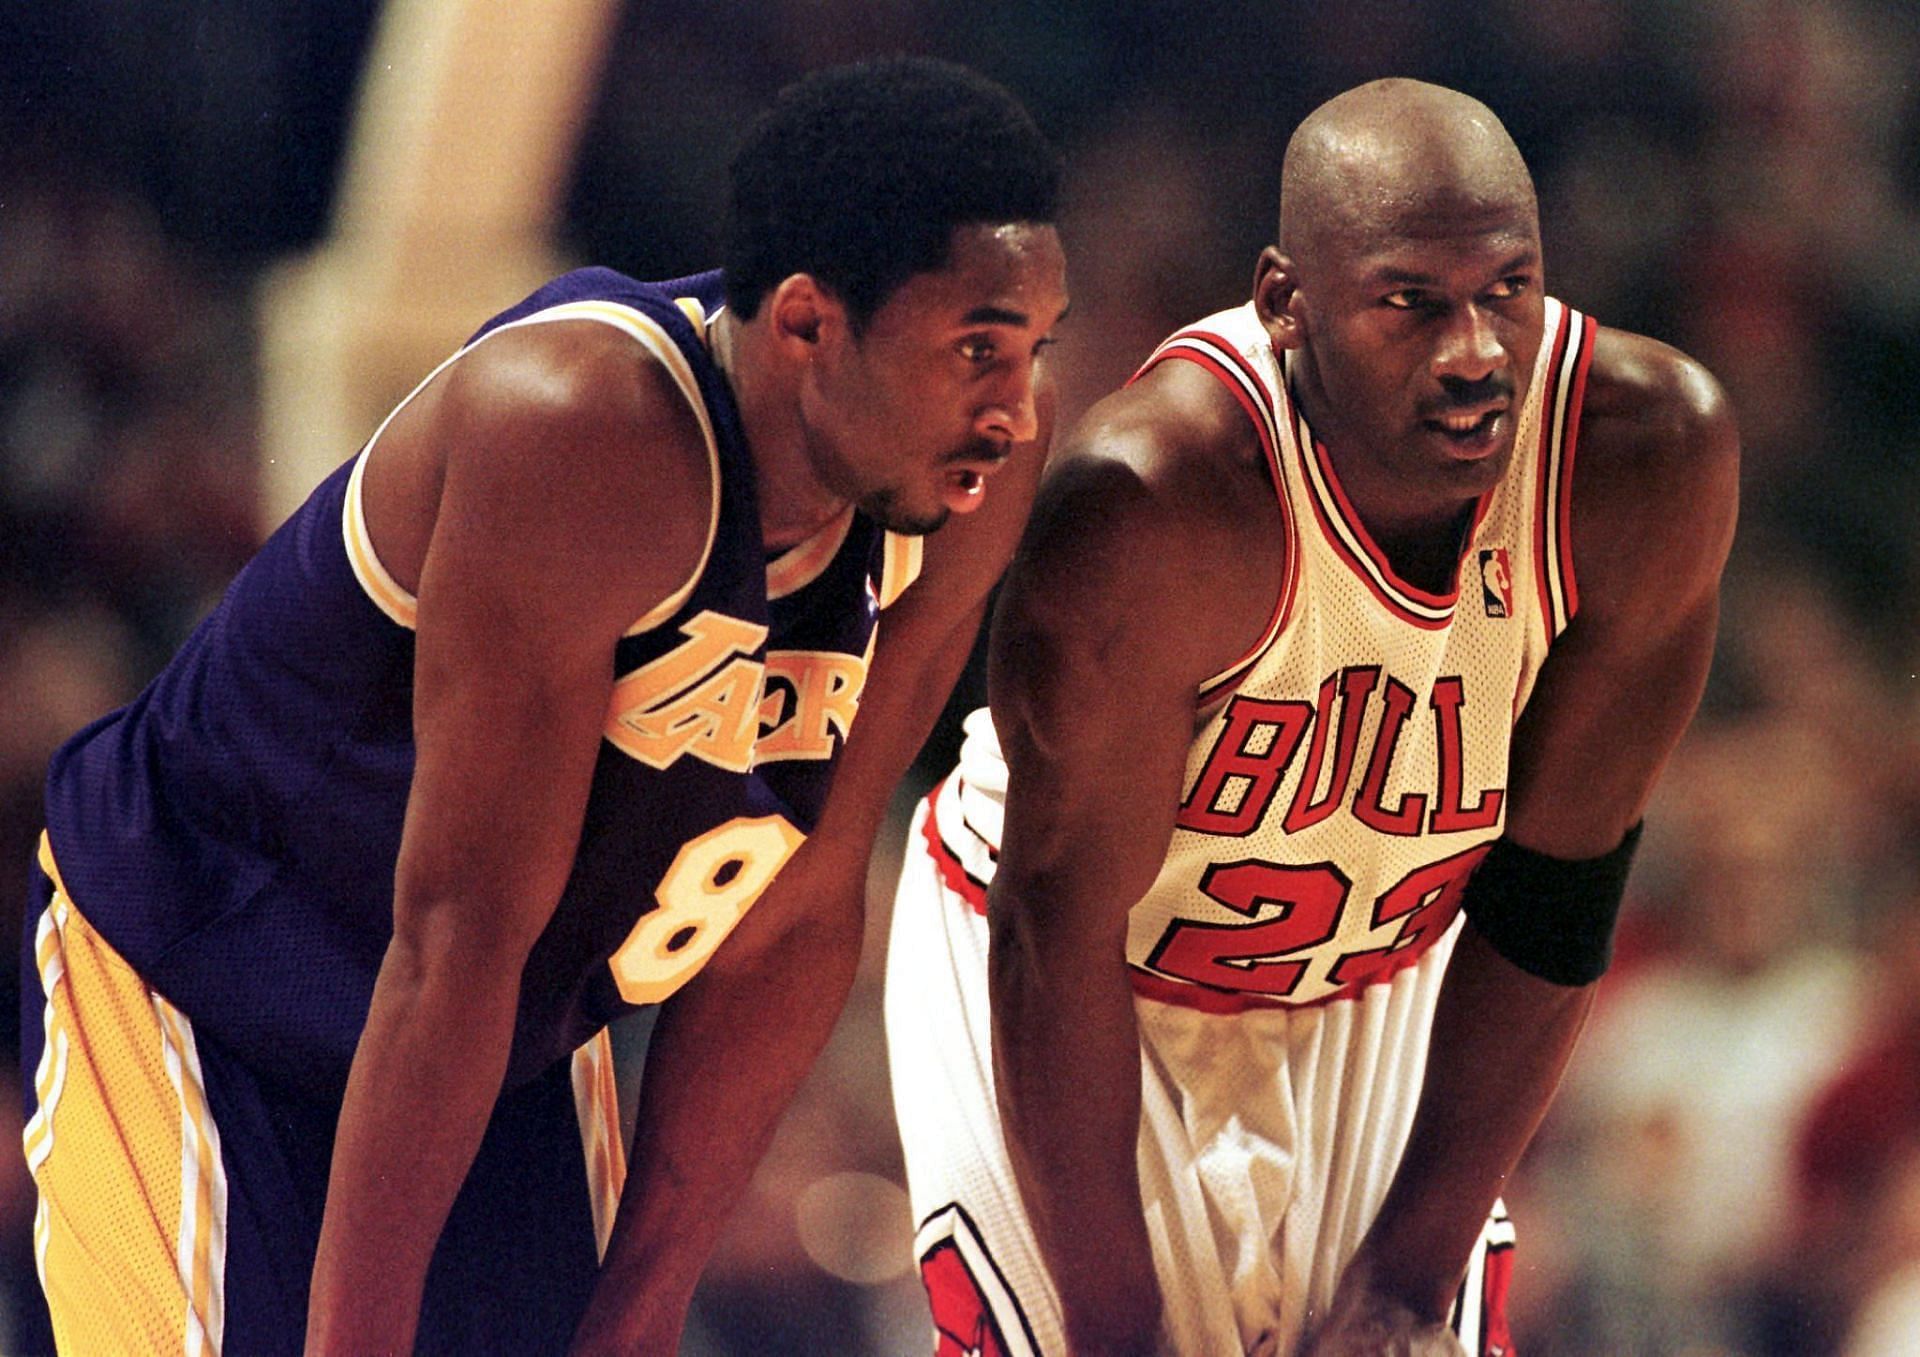 Michael Jordan and Kobe Bryant [Photo: Newsweek]